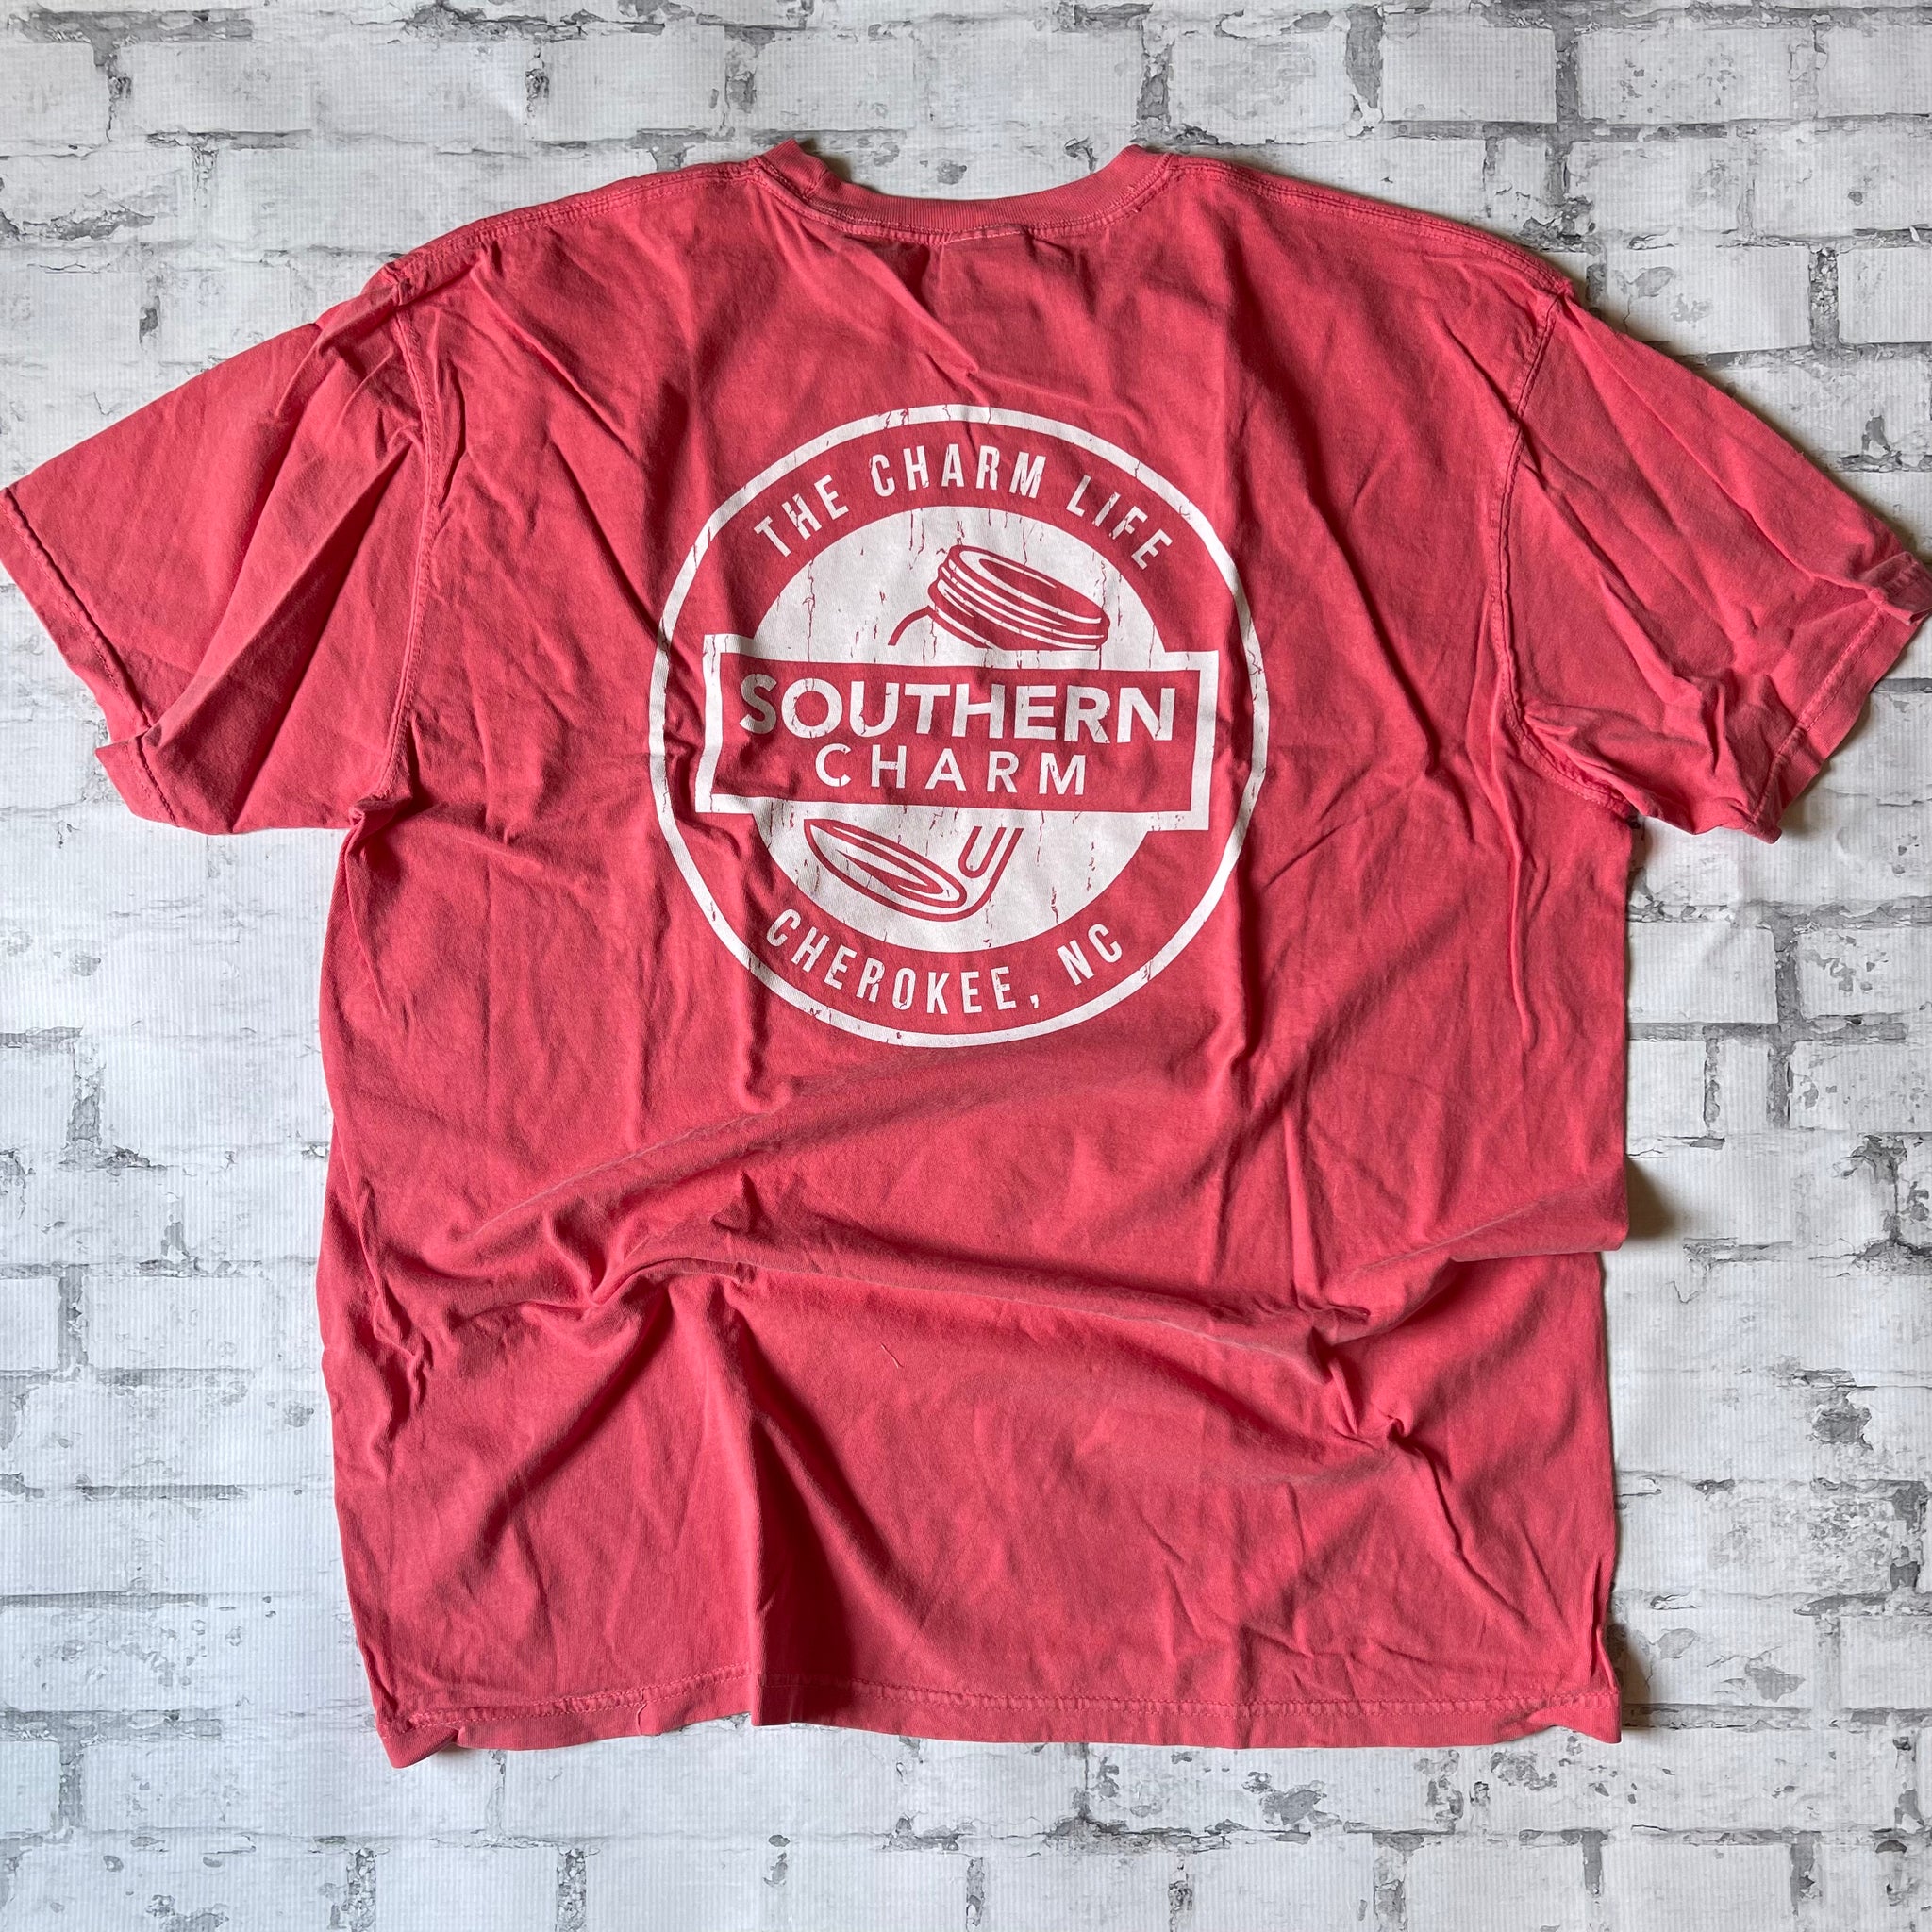 Southern Charm "70s" Short Sleeve T-shirt - Watermelon - Southern Charm "Shop The Charm"